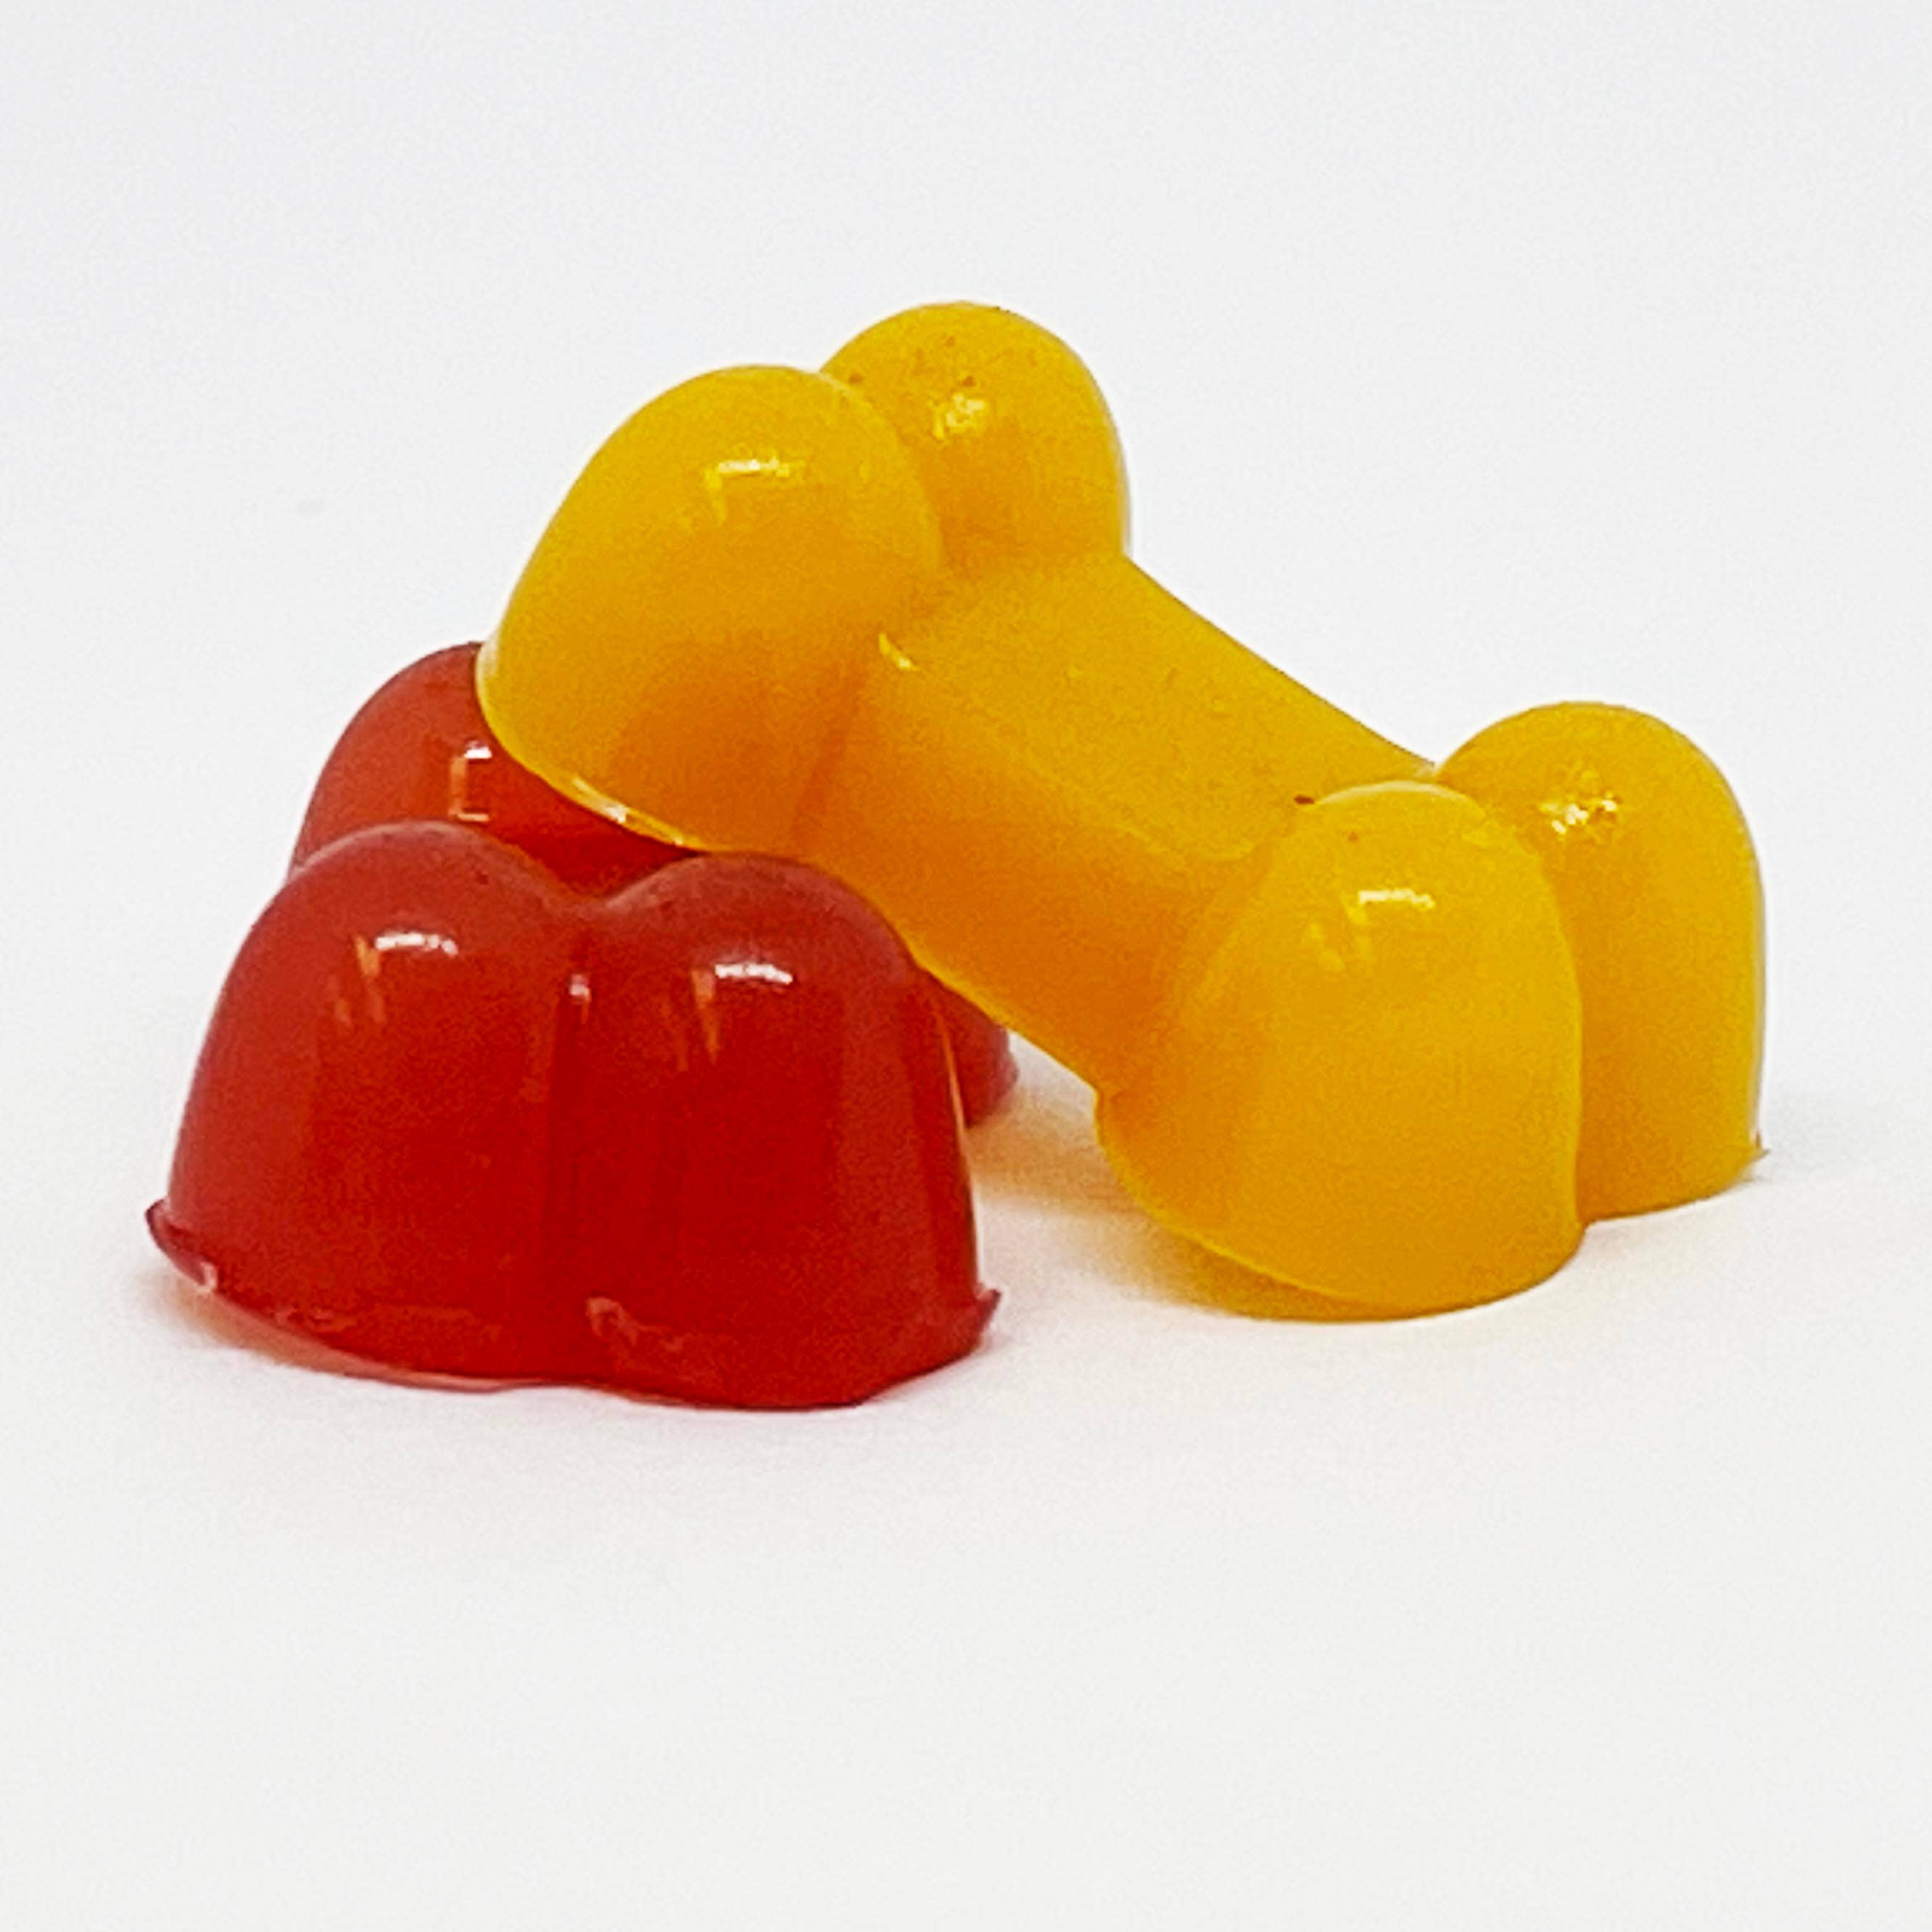 SodaPup - Dogtastic Jelly Shots Silicone Mold - Bone Shape